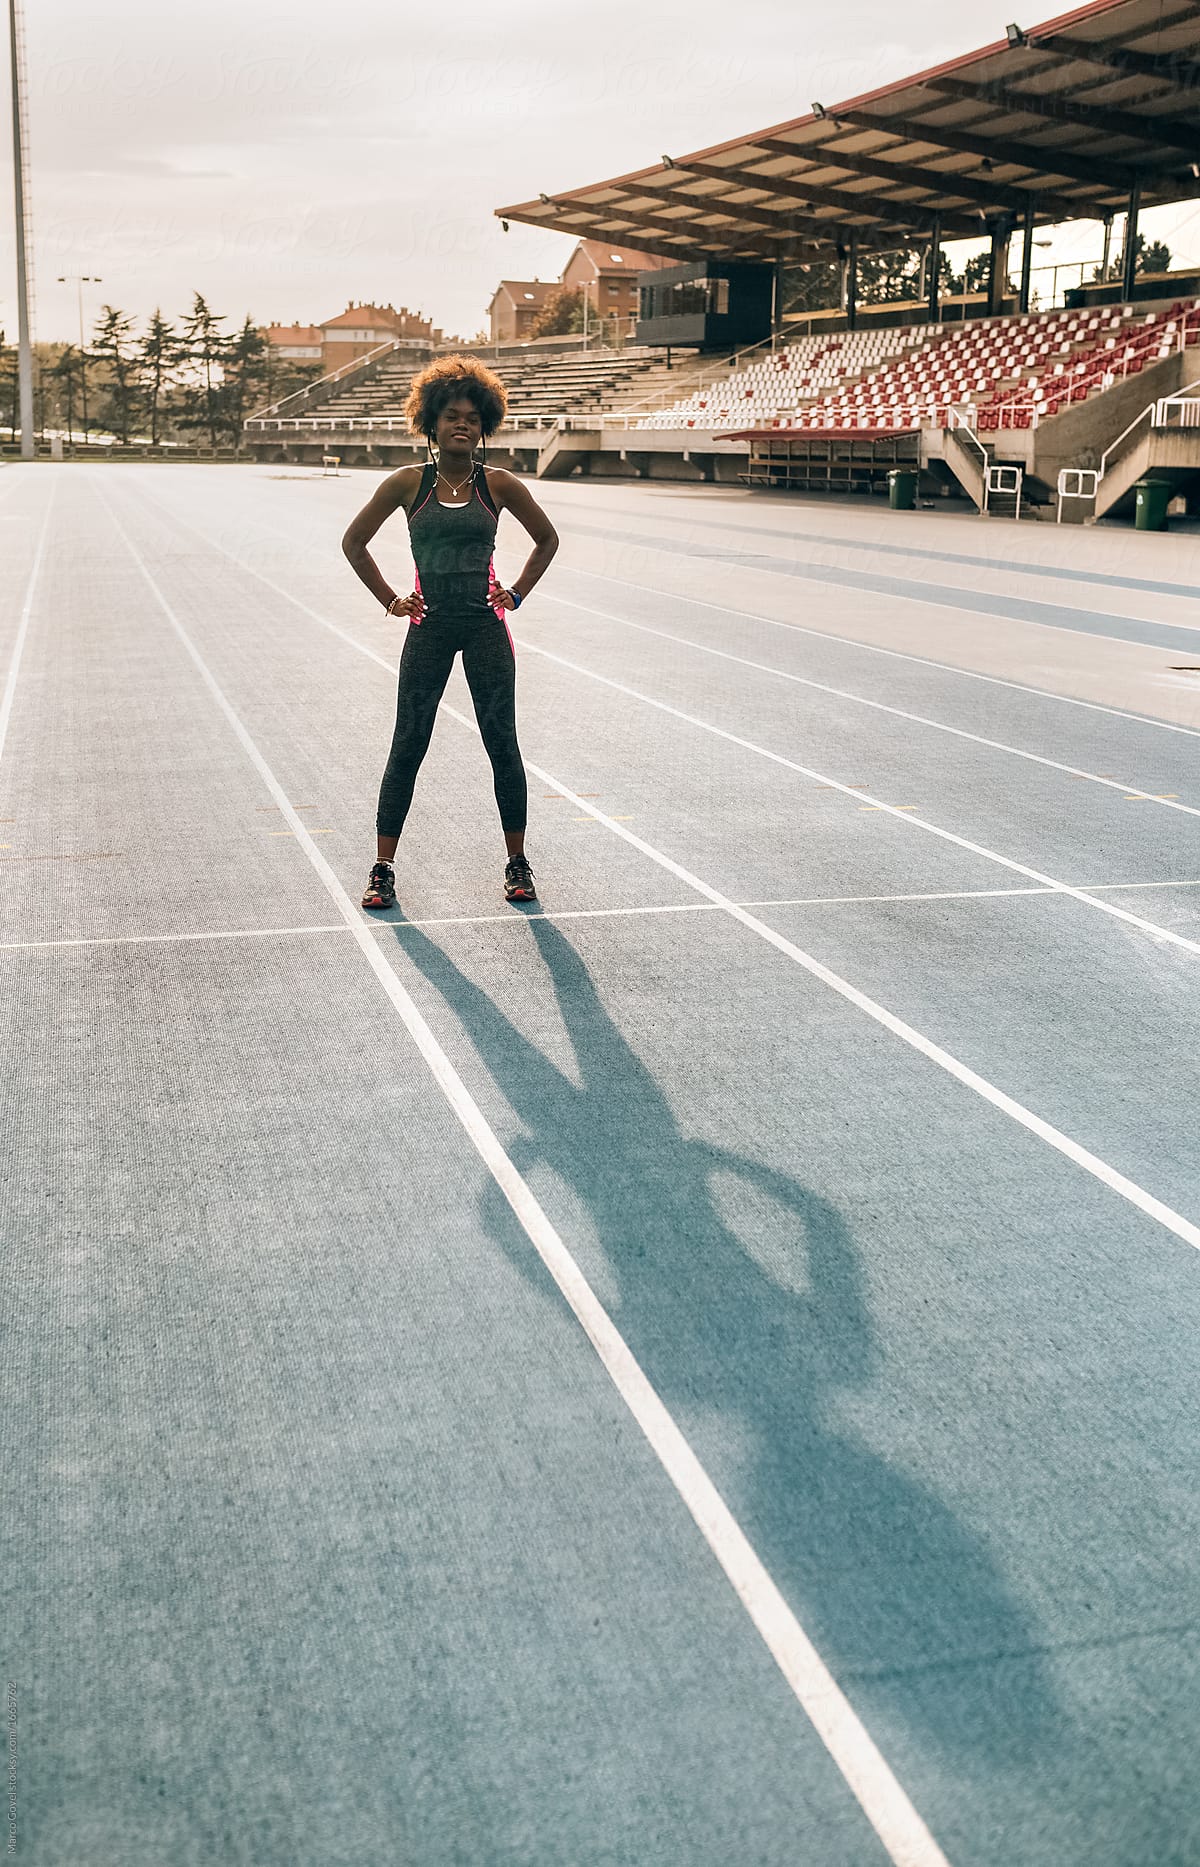 Black athlete woman on a race track